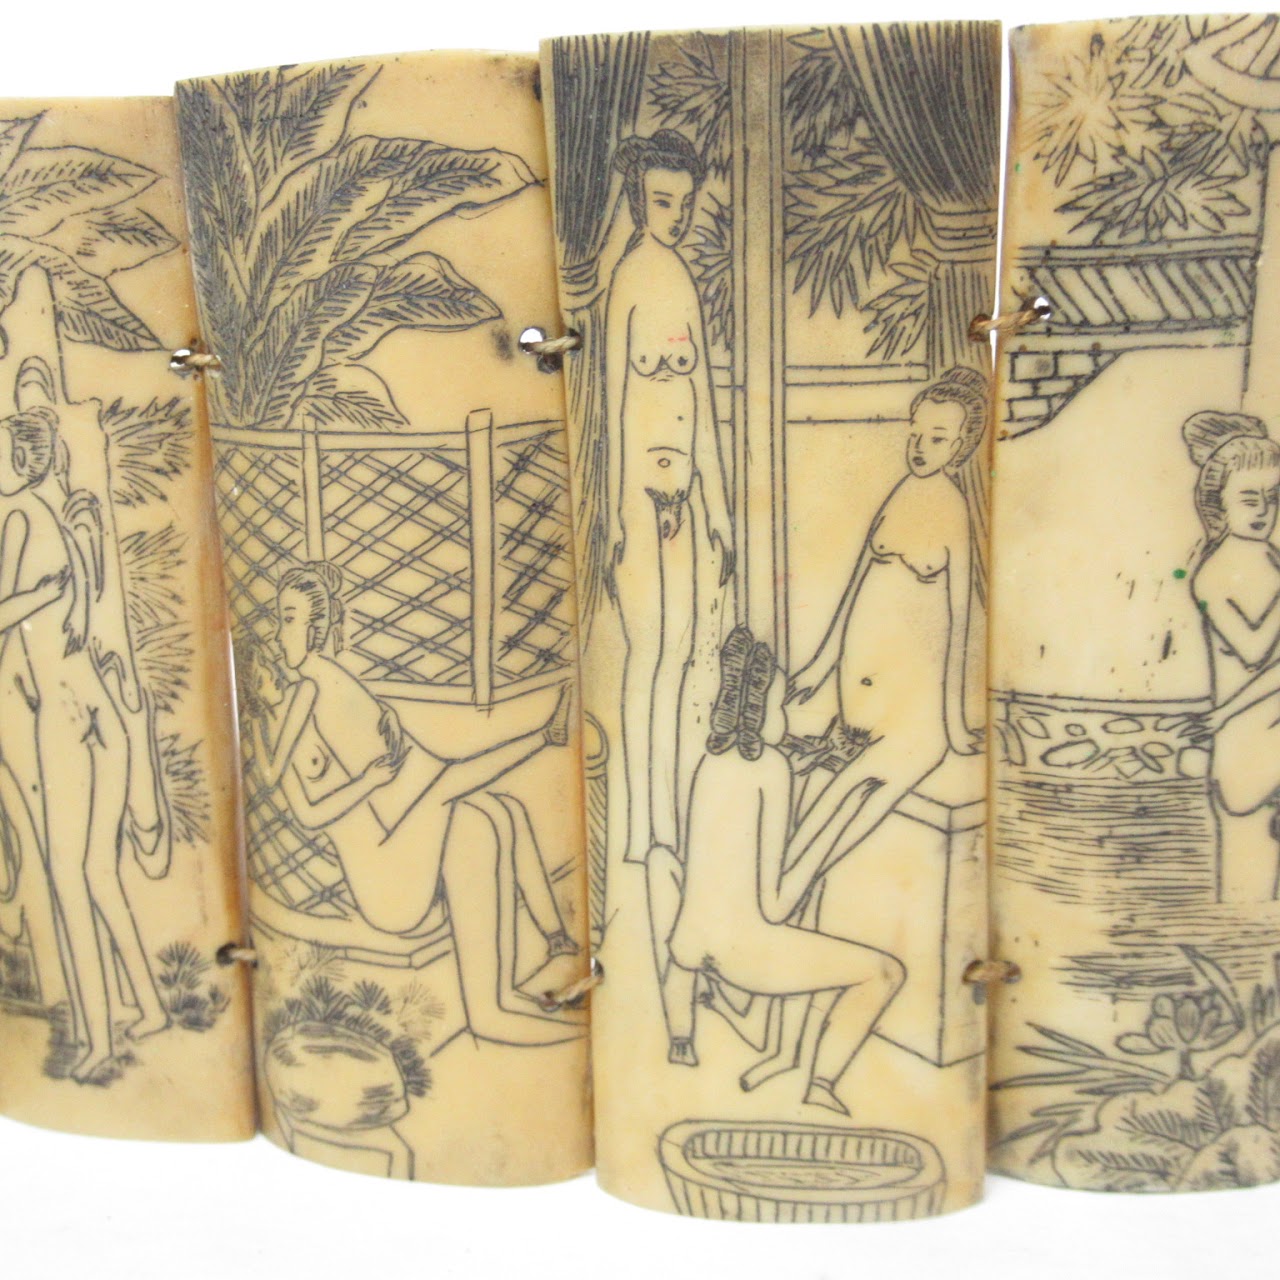 Kama Sutra Resin Shunga Art Scrimshaw Panels. *Graphic Images*